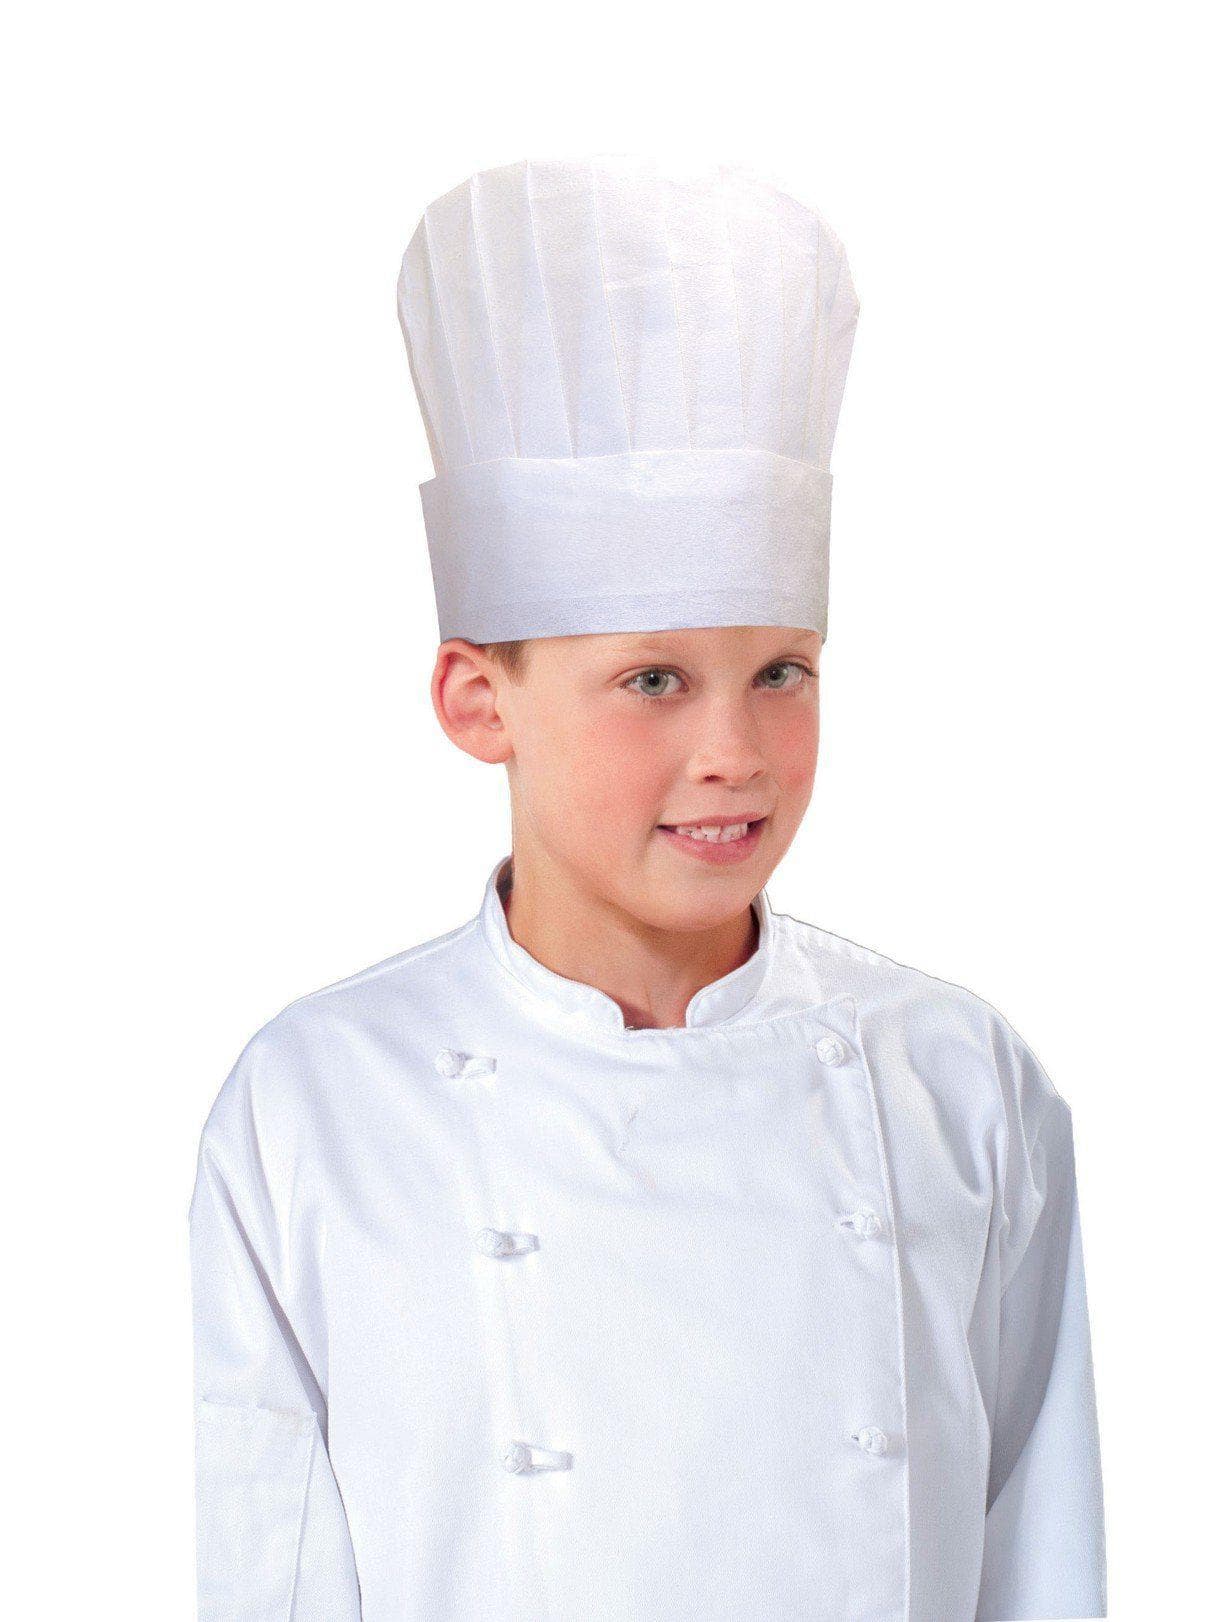 Kids' White Paper Chef Hat - costumes.com